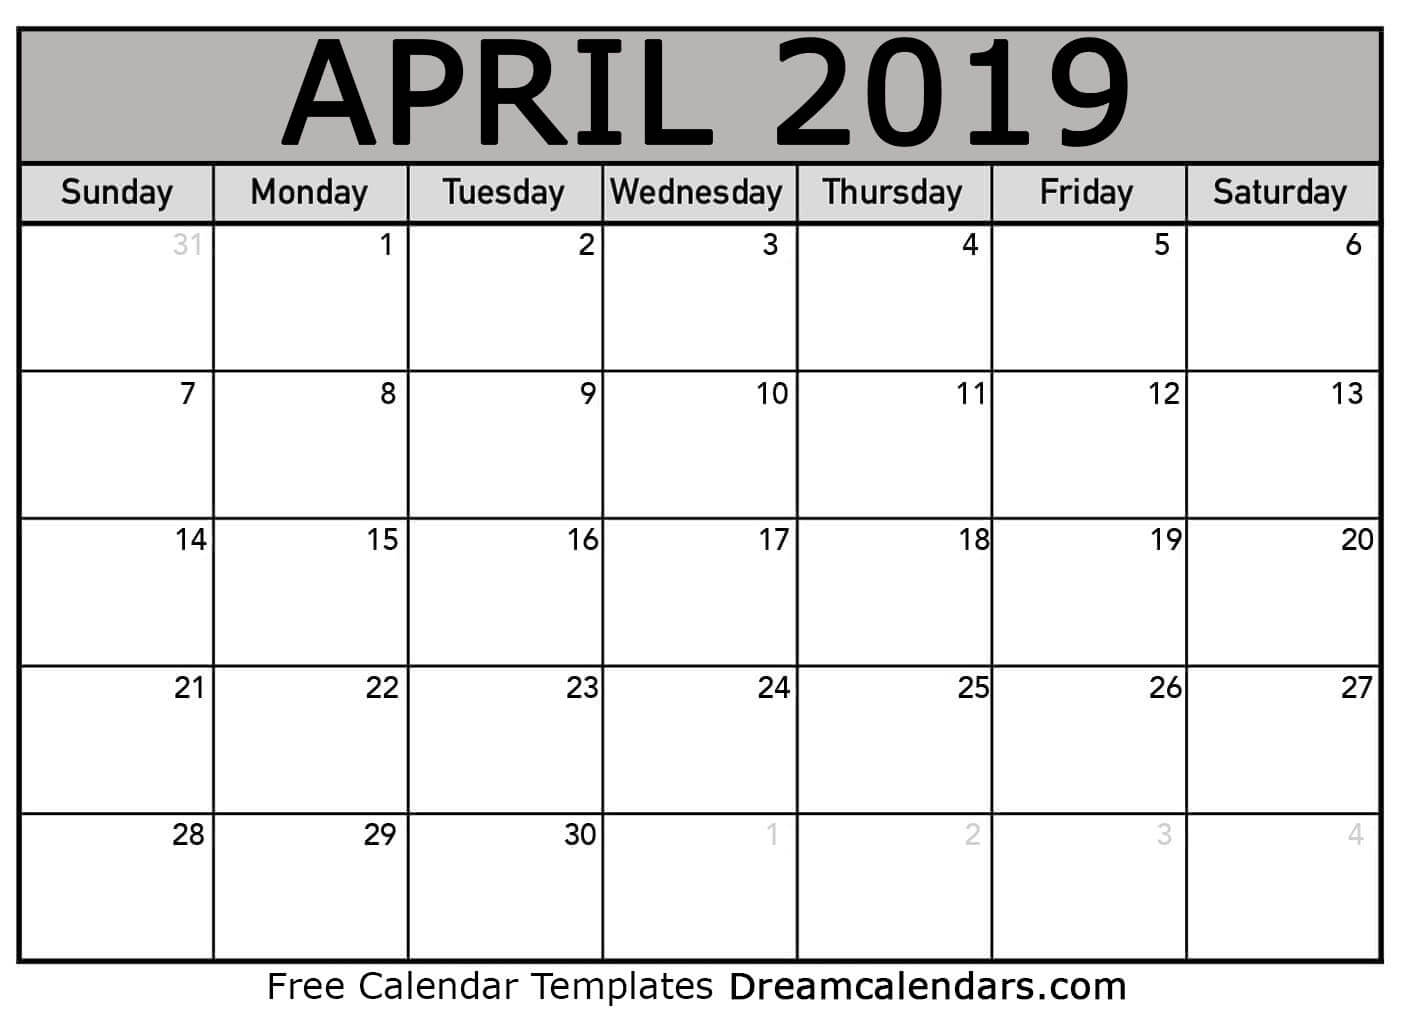 april-2019-calendar-free-blank-printable-with-holidays